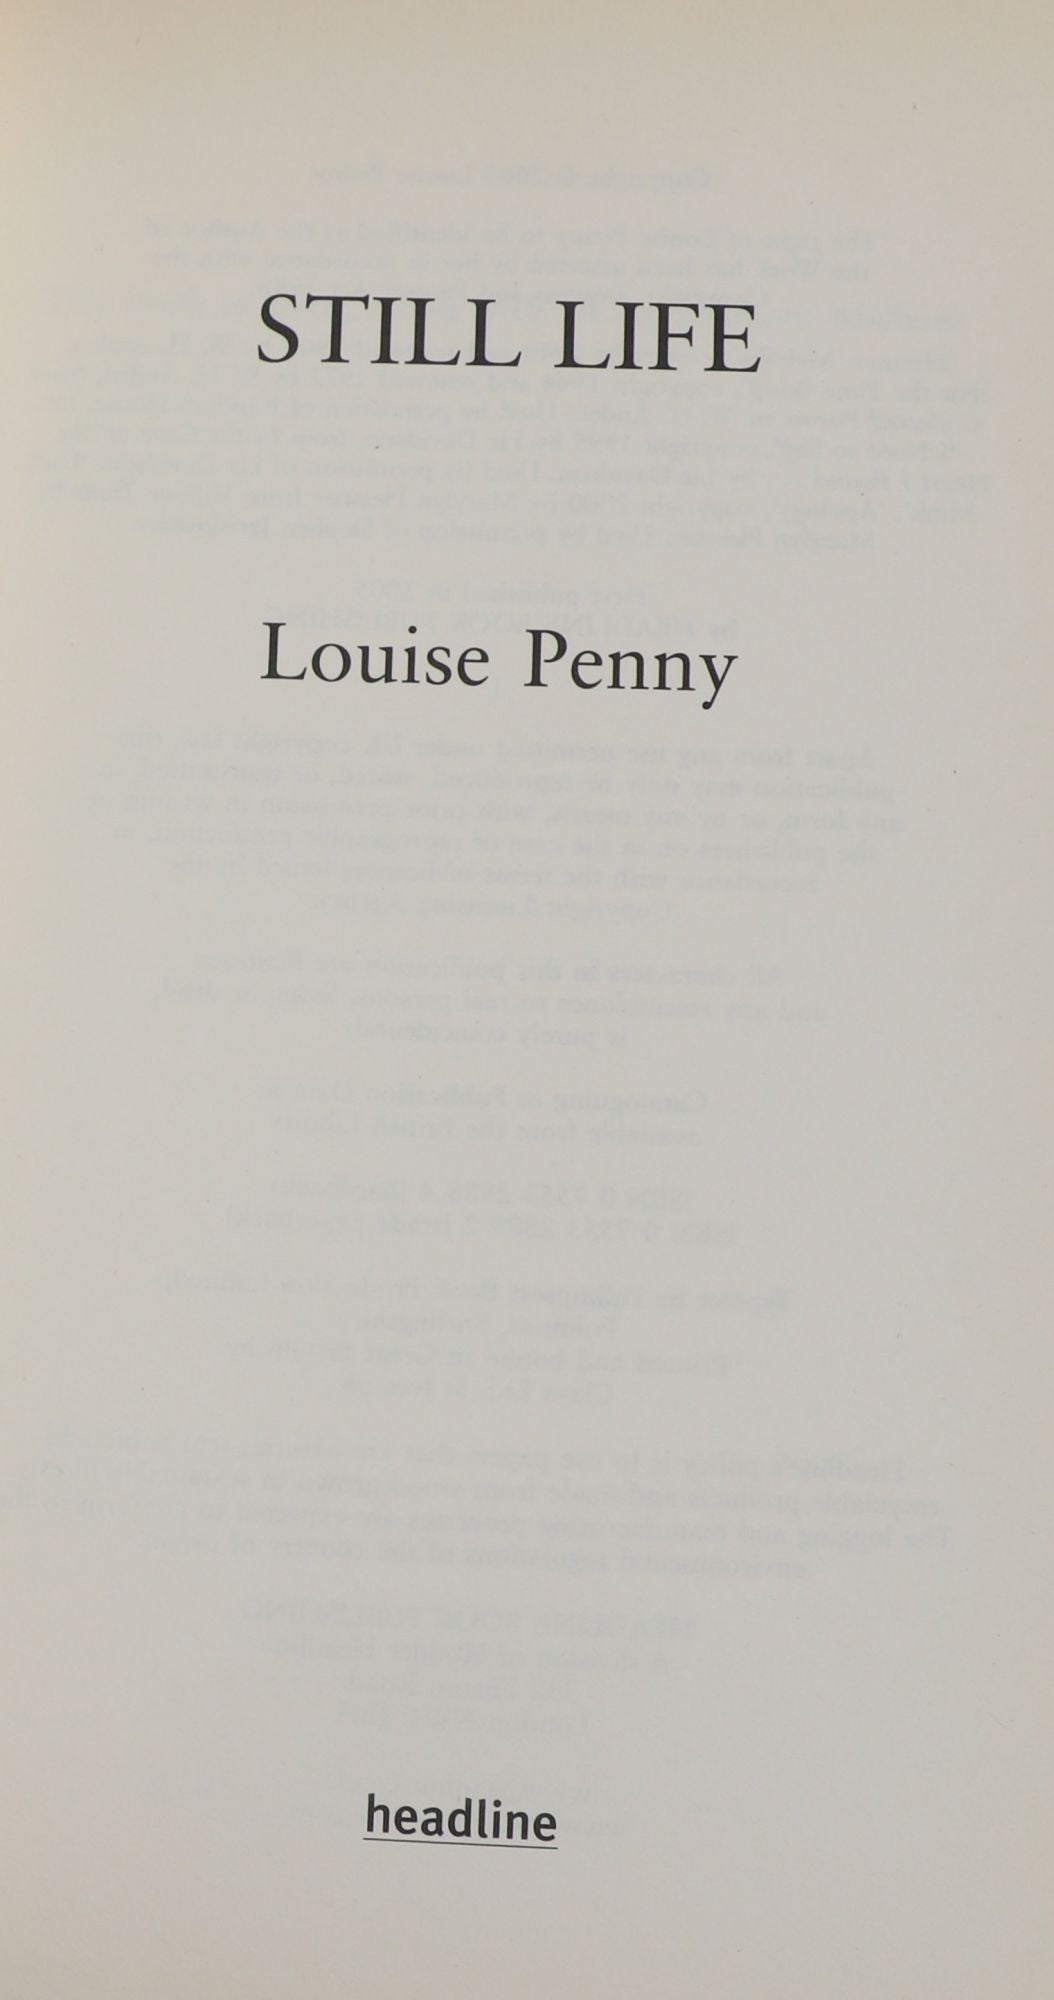 louise penny - still life - Books - AbeBooks